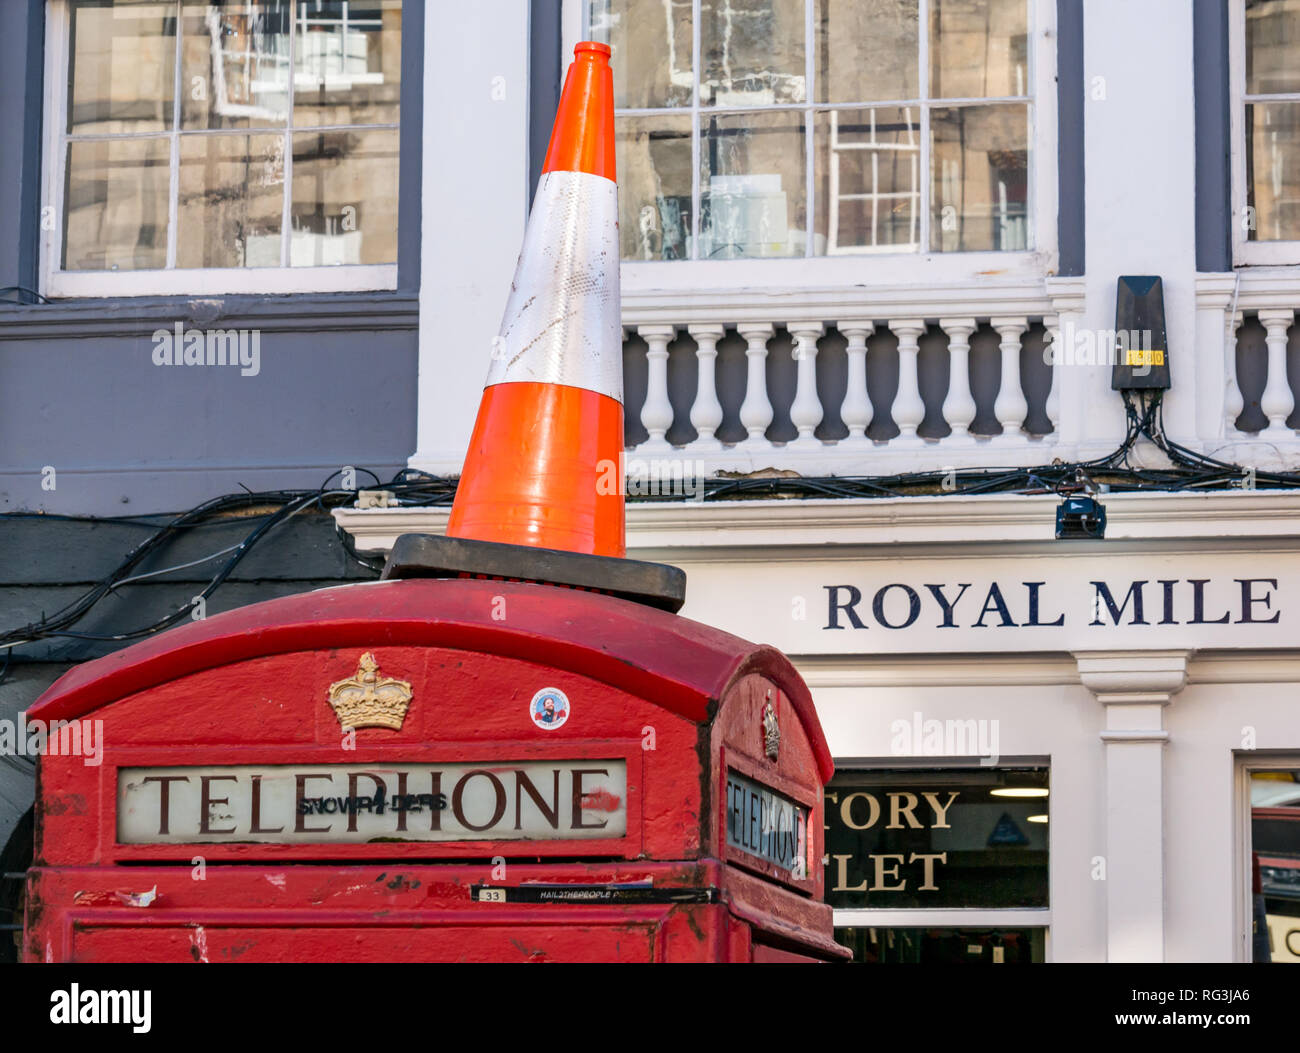 Iconic red British telephone box with traffic cone, Royal Mile street sign, Edinburgh, Scotland, UK Stock Photo